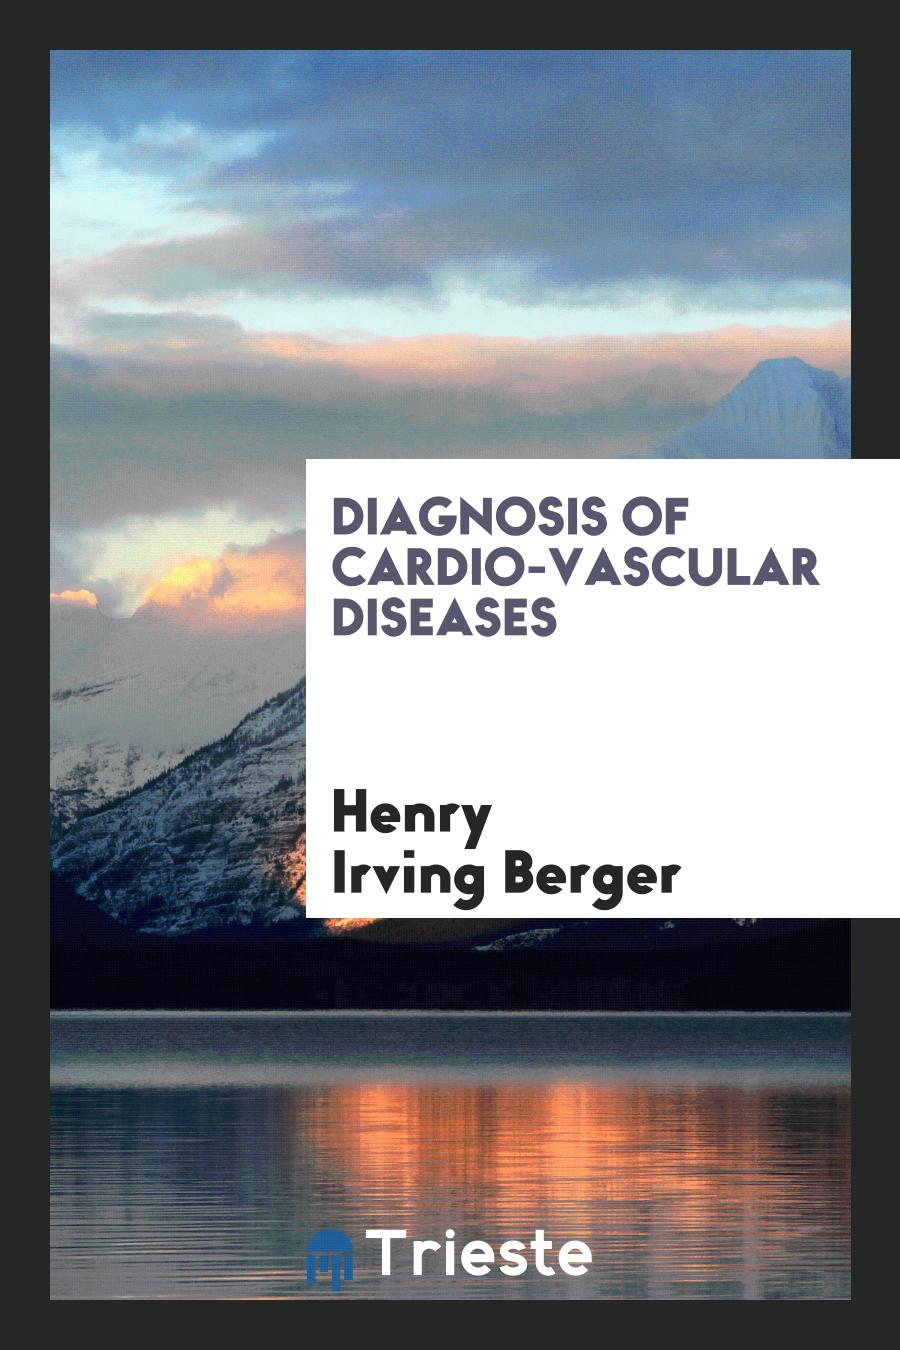 Diagnosis of Cardio-vascular Diseases